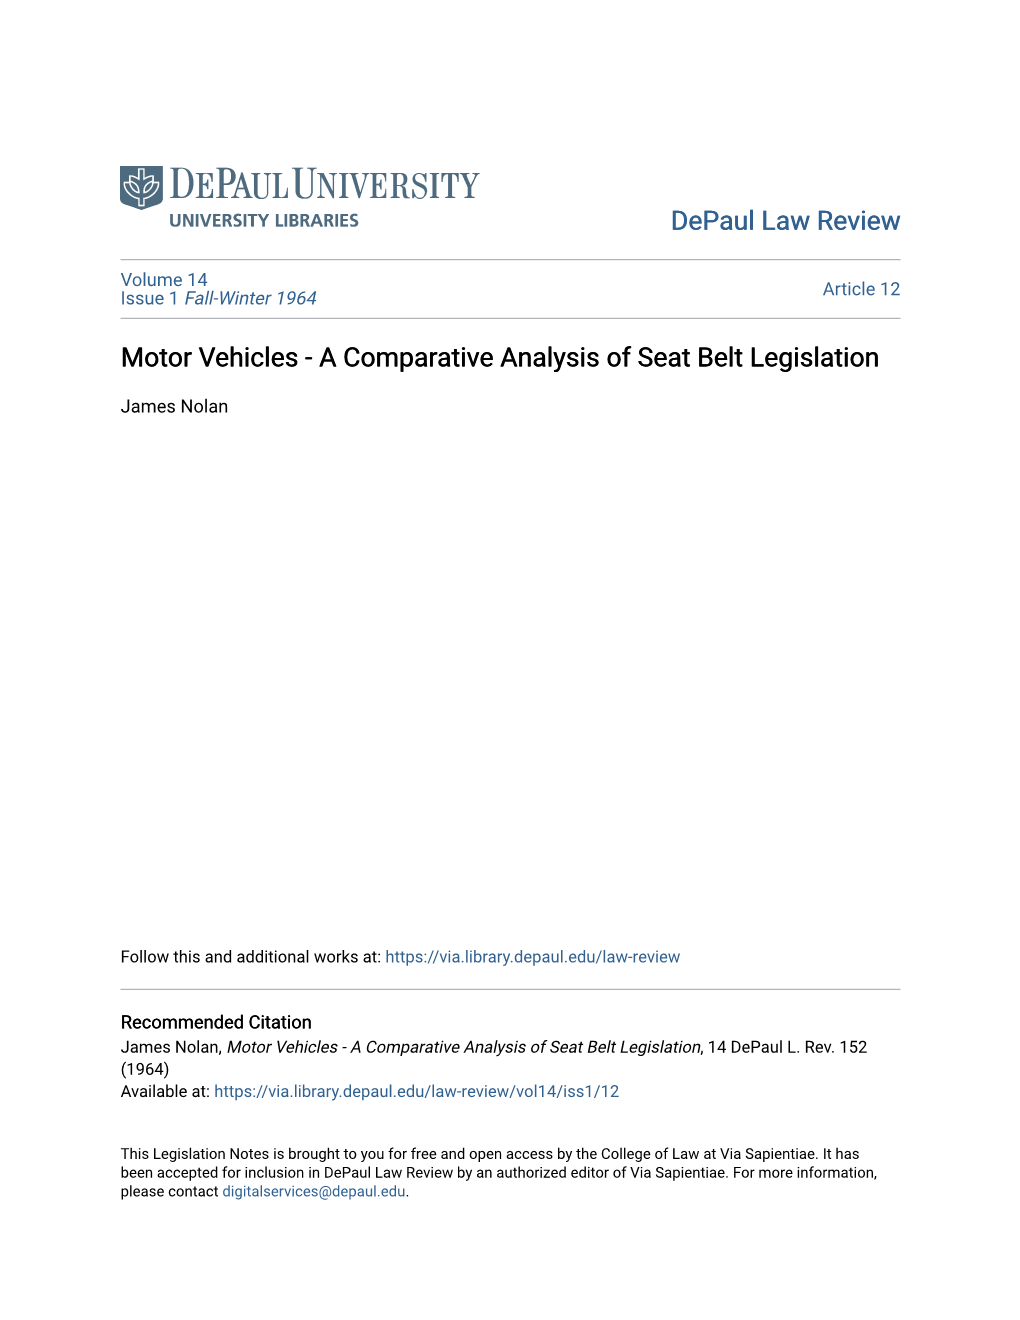 Motor Vehicles - a Comparative Analysis of Seat Belt Legislation